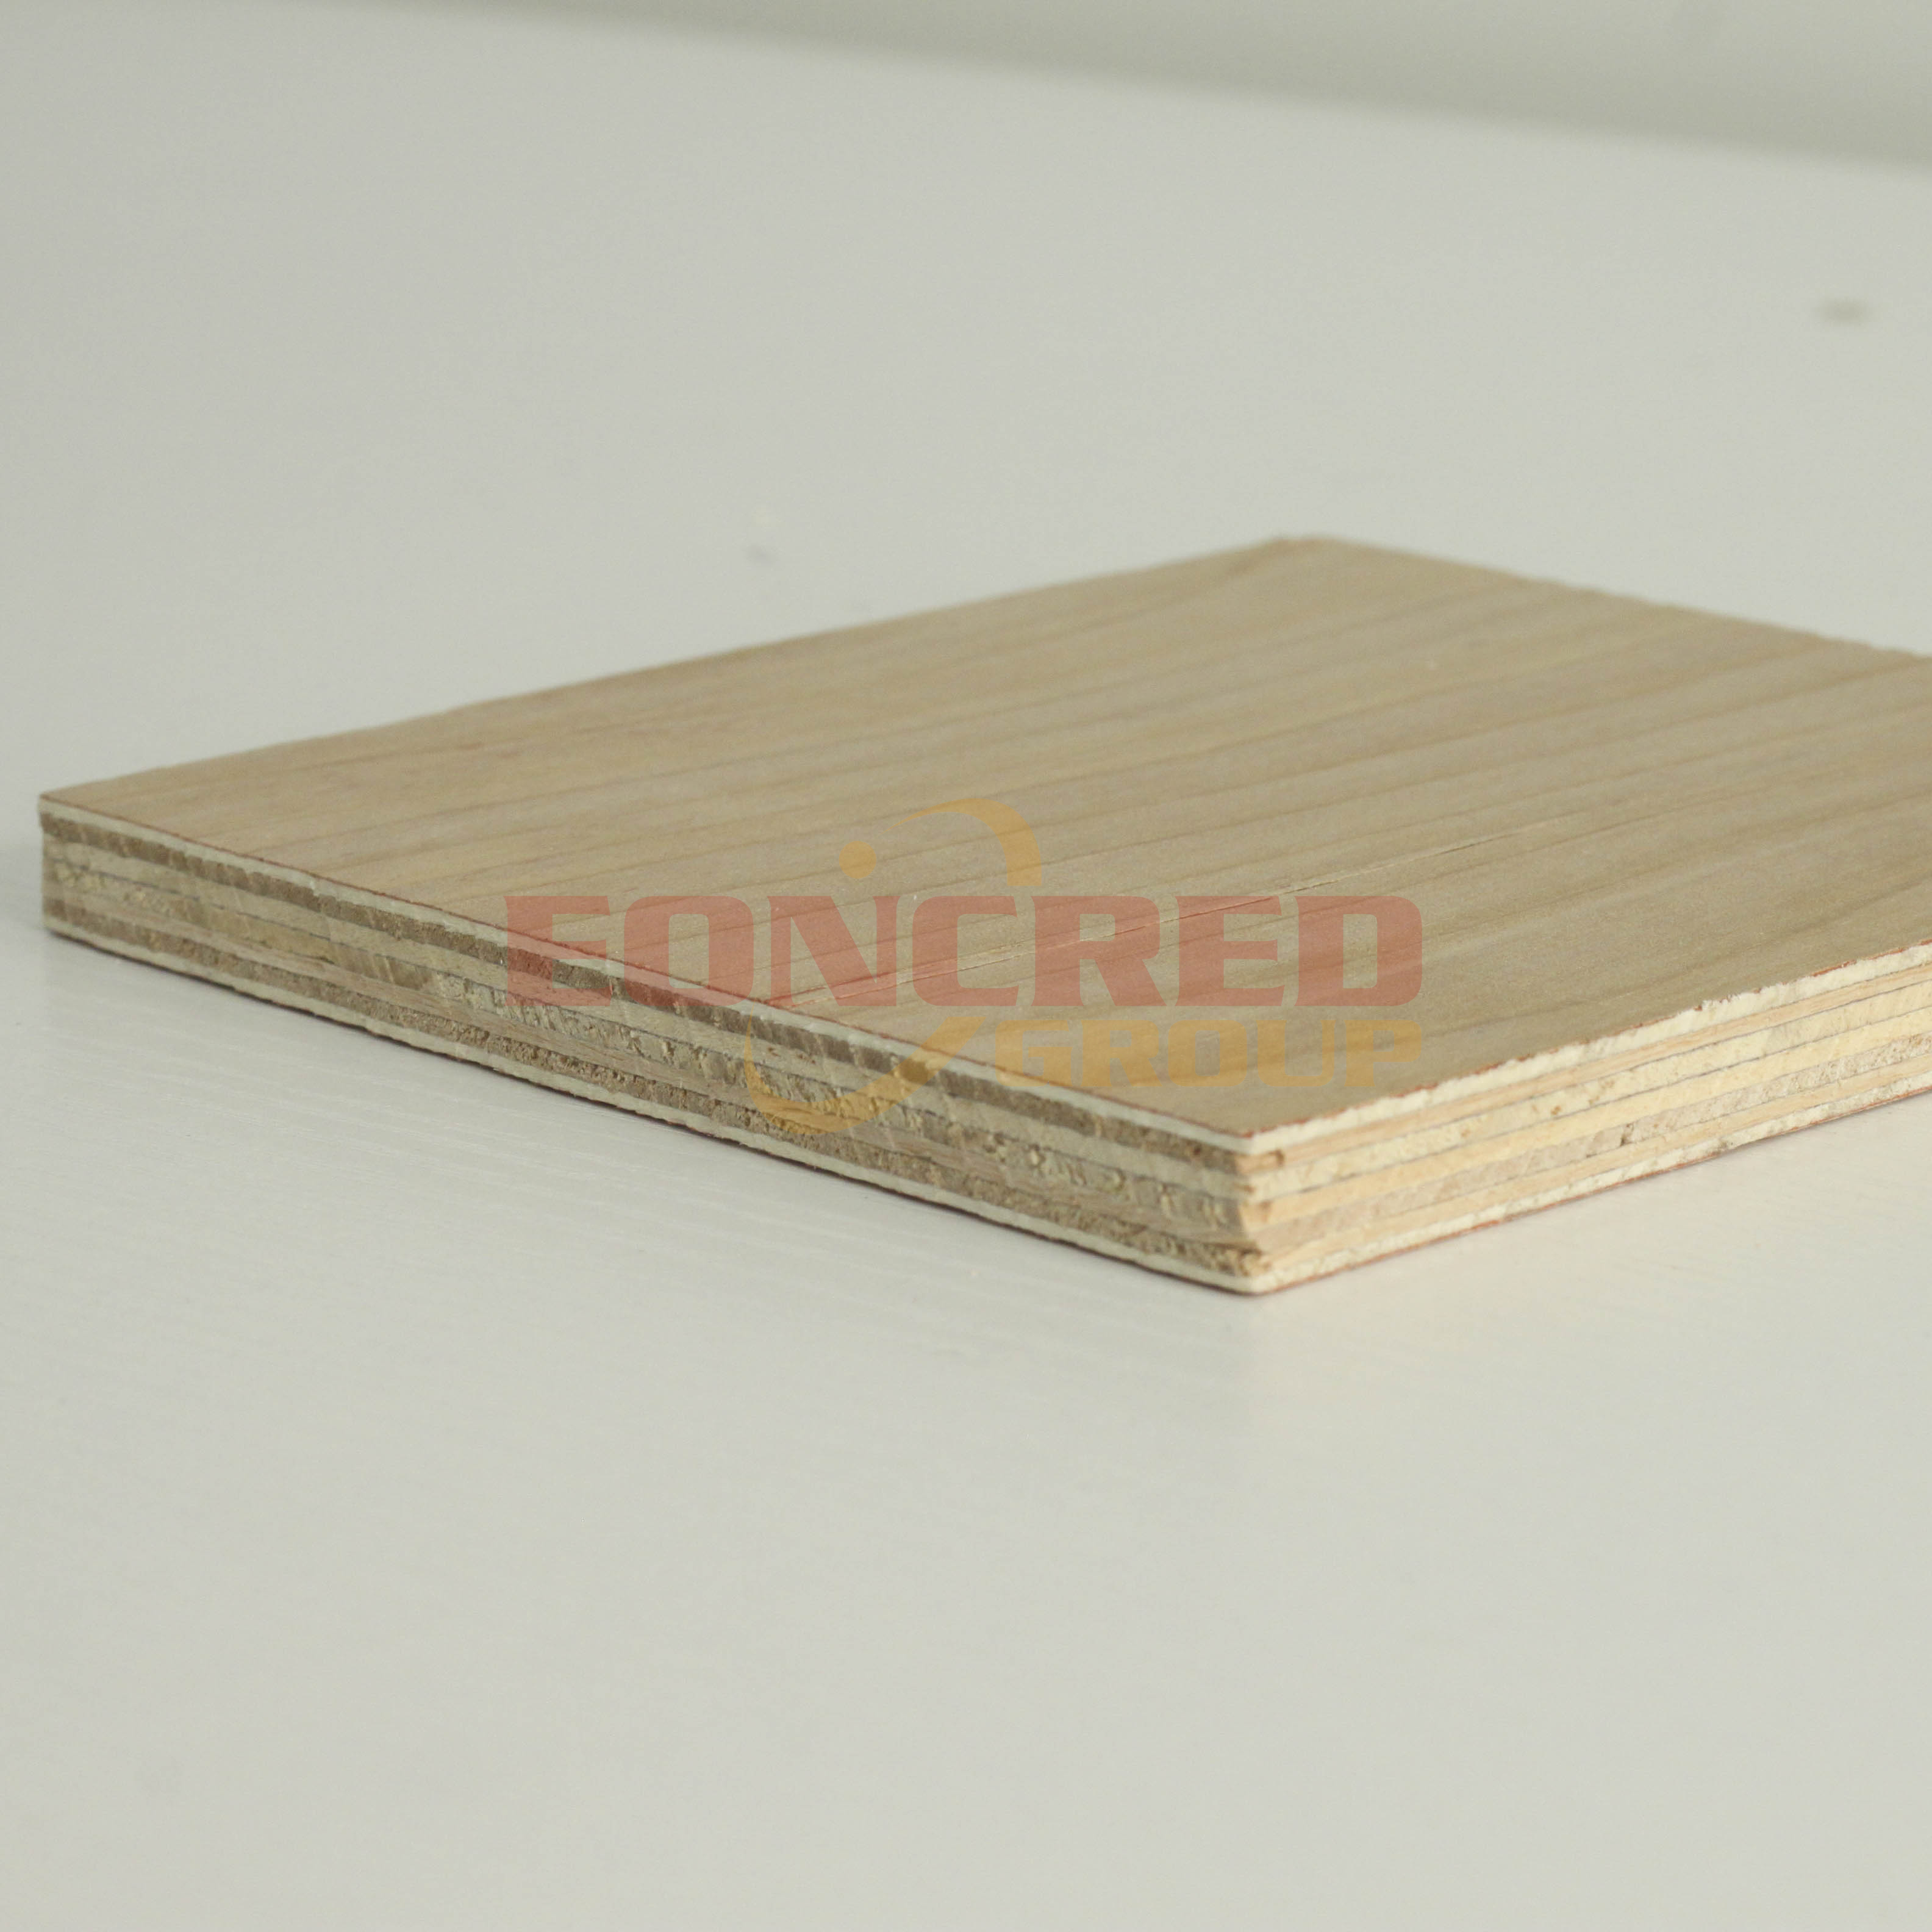 High Level Poplar Plywood for Fruit Box